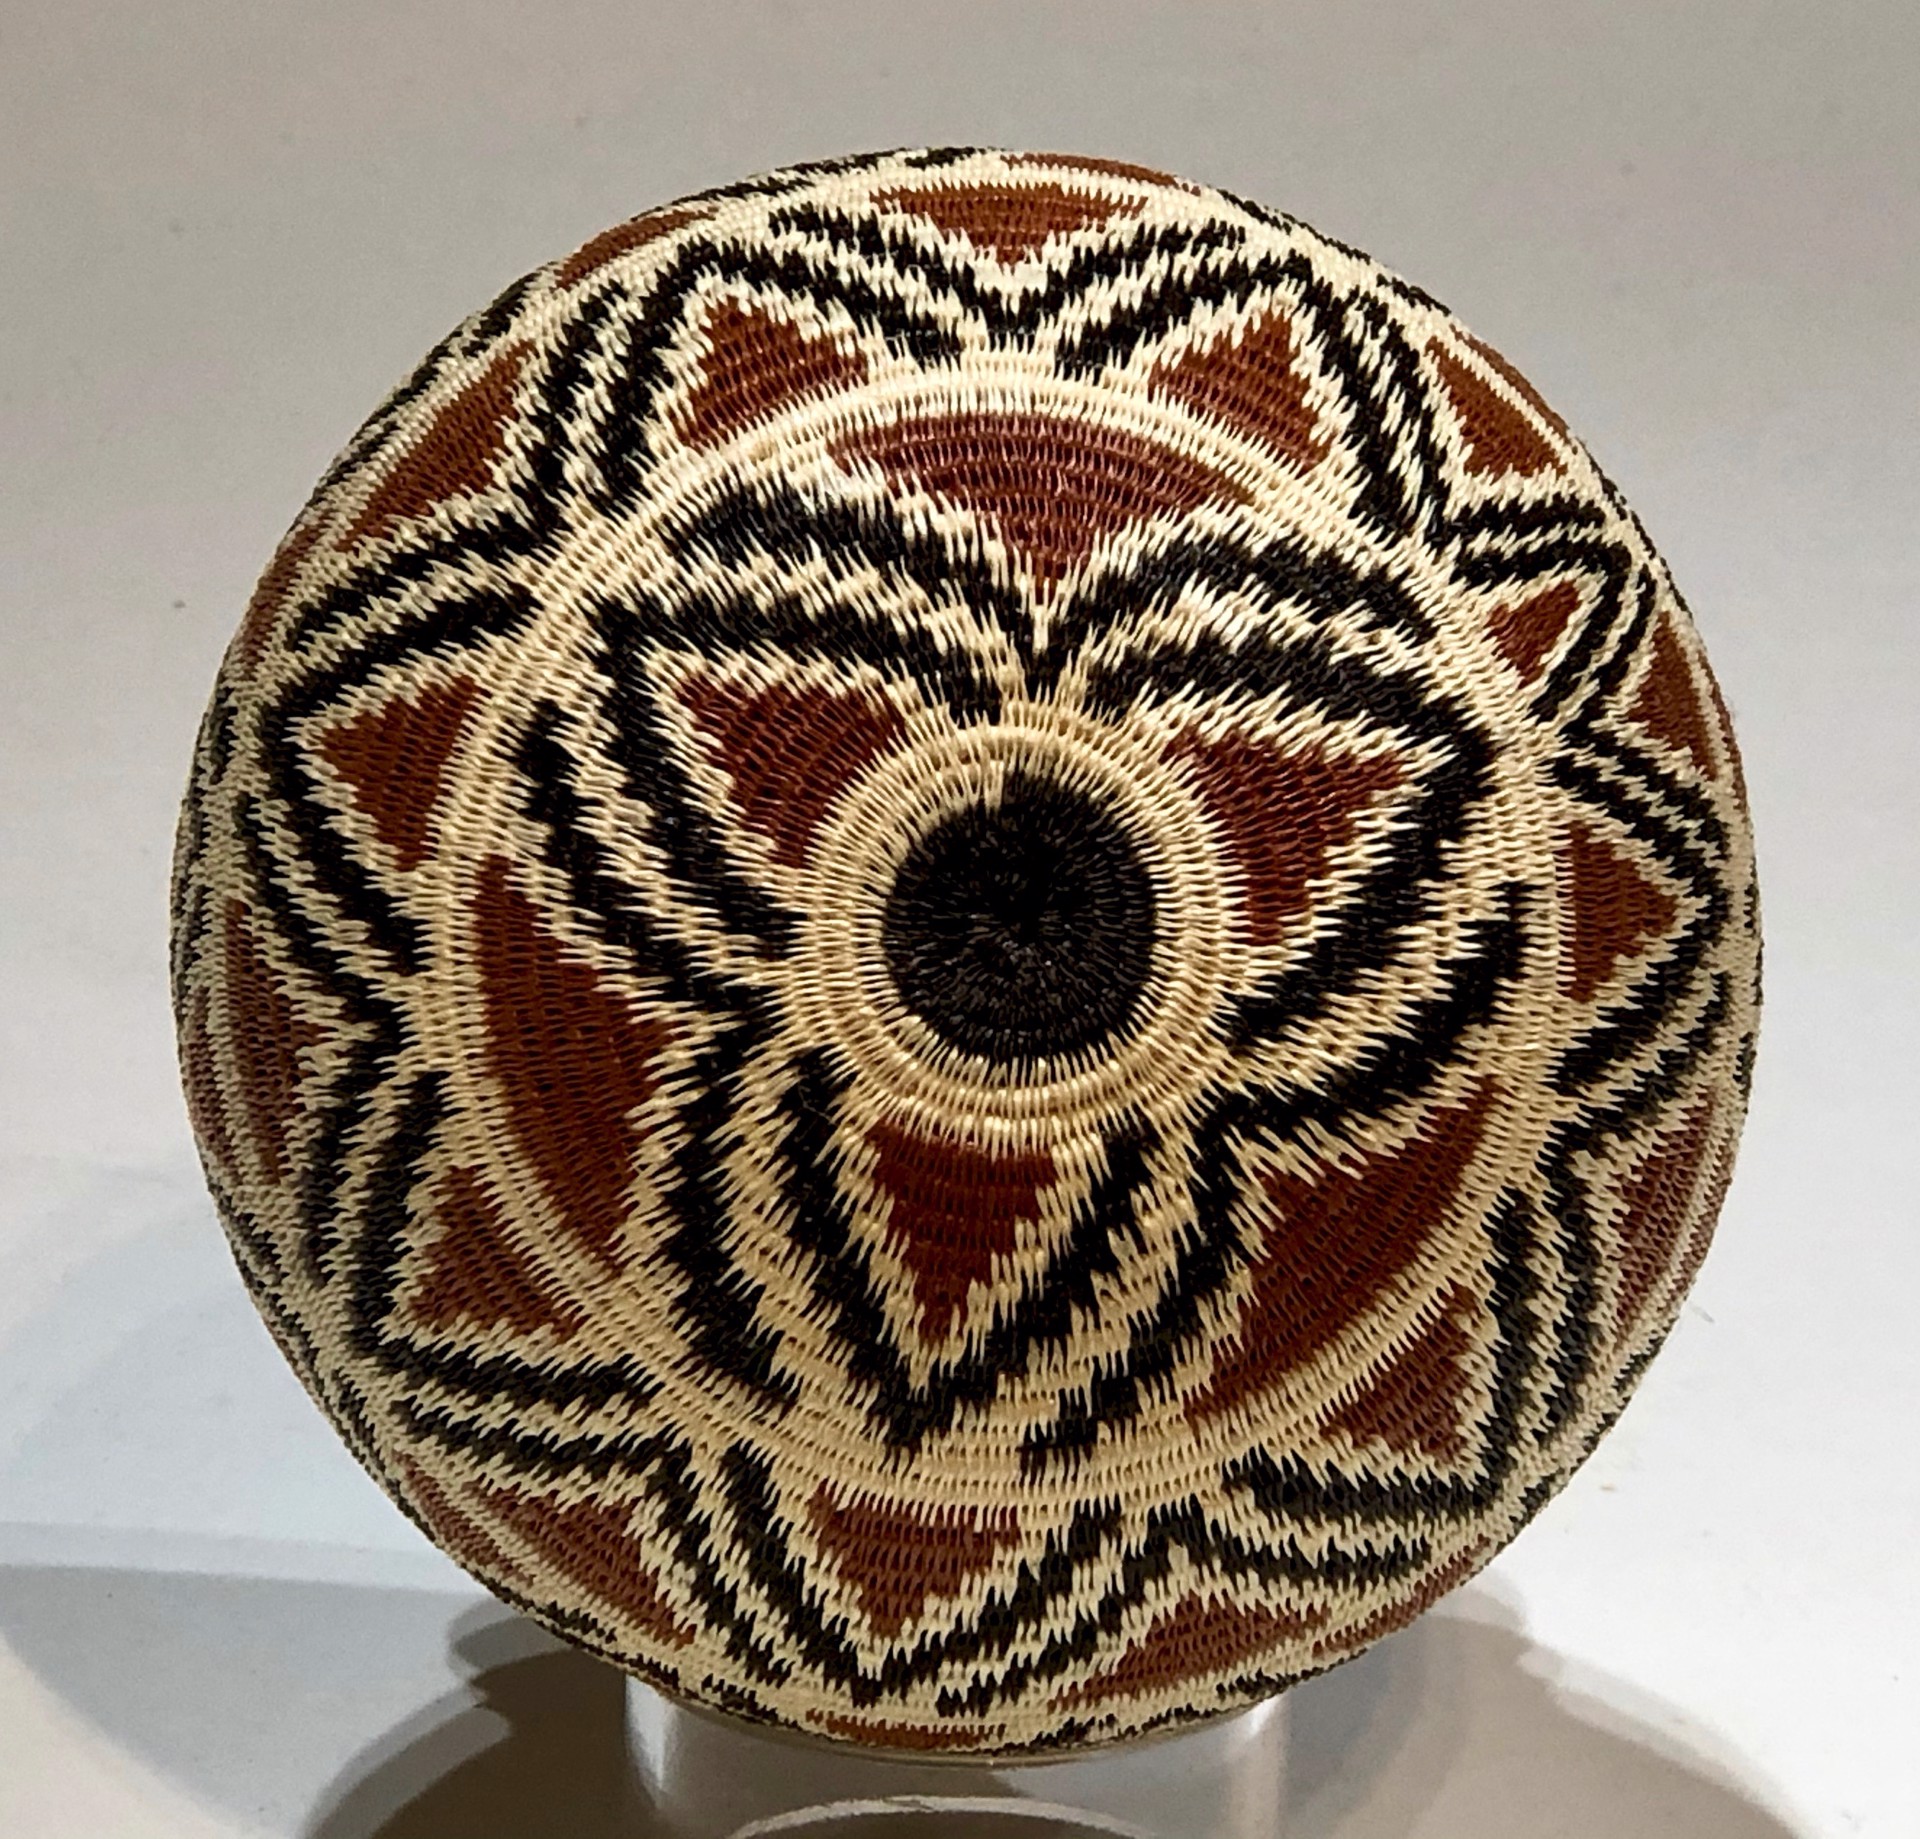 Brown, White, Black basket (425) by Wounaan & Embera Panama Rainforest Baskets Wounaan